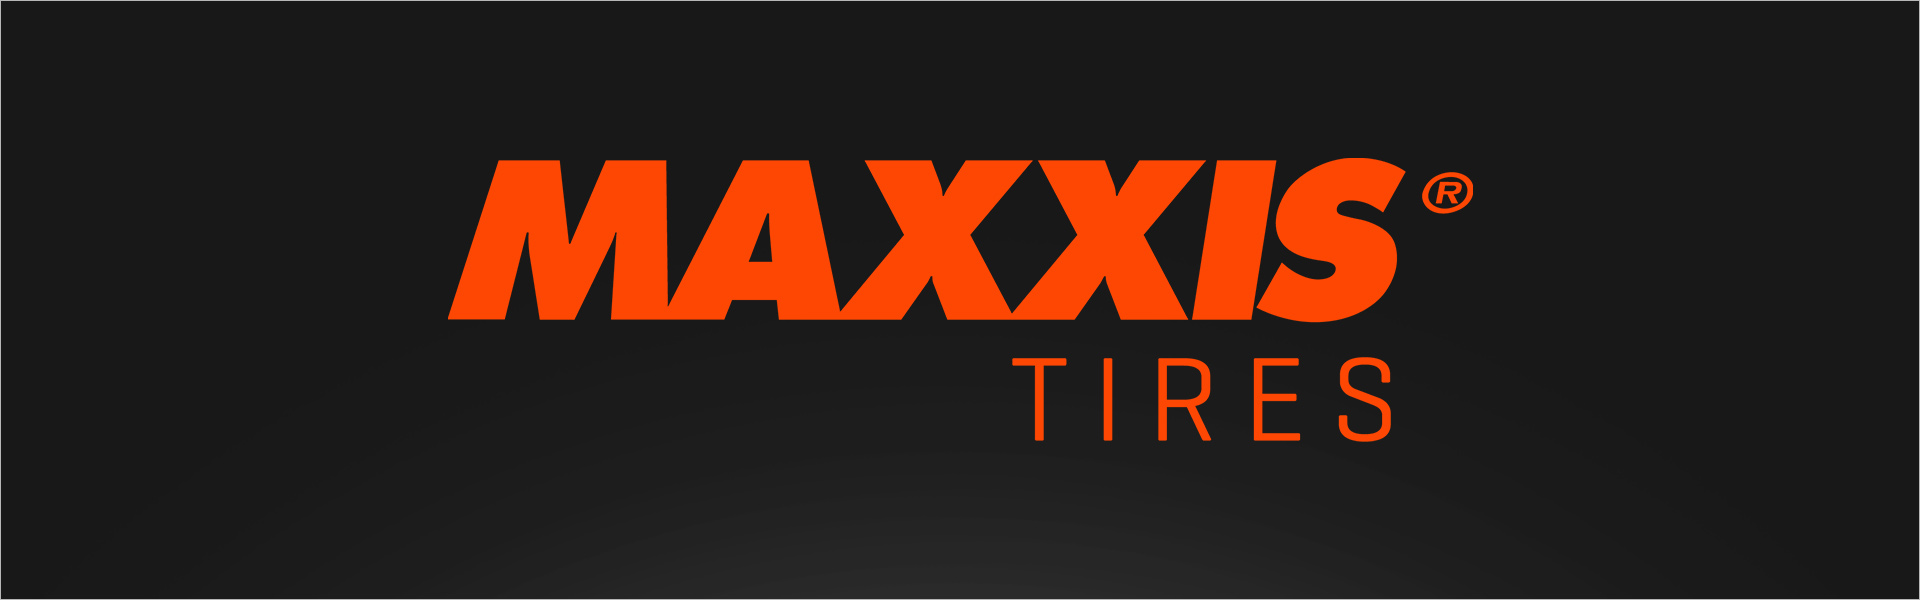 Maxxis ME3 155/70R14 77 T Maxxis